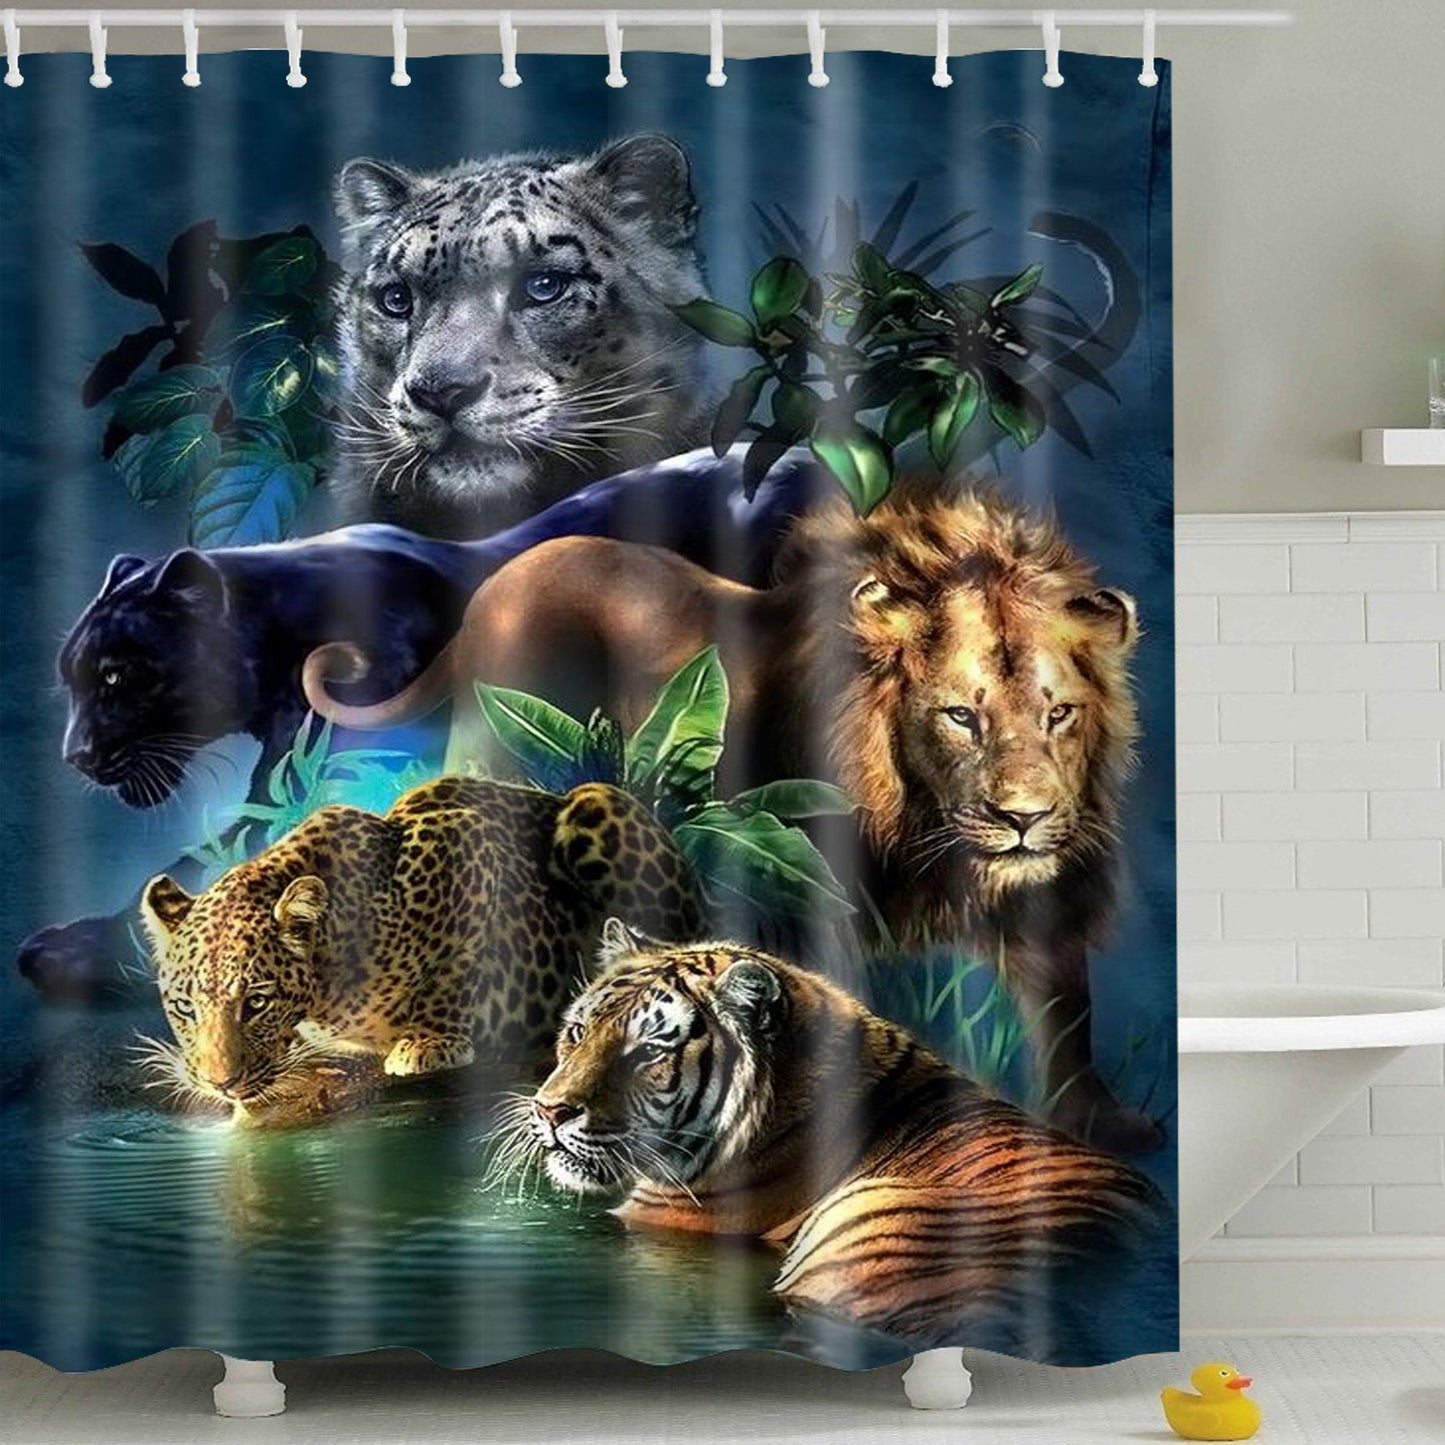 Jungle Wildlife Animal Shower Curtain